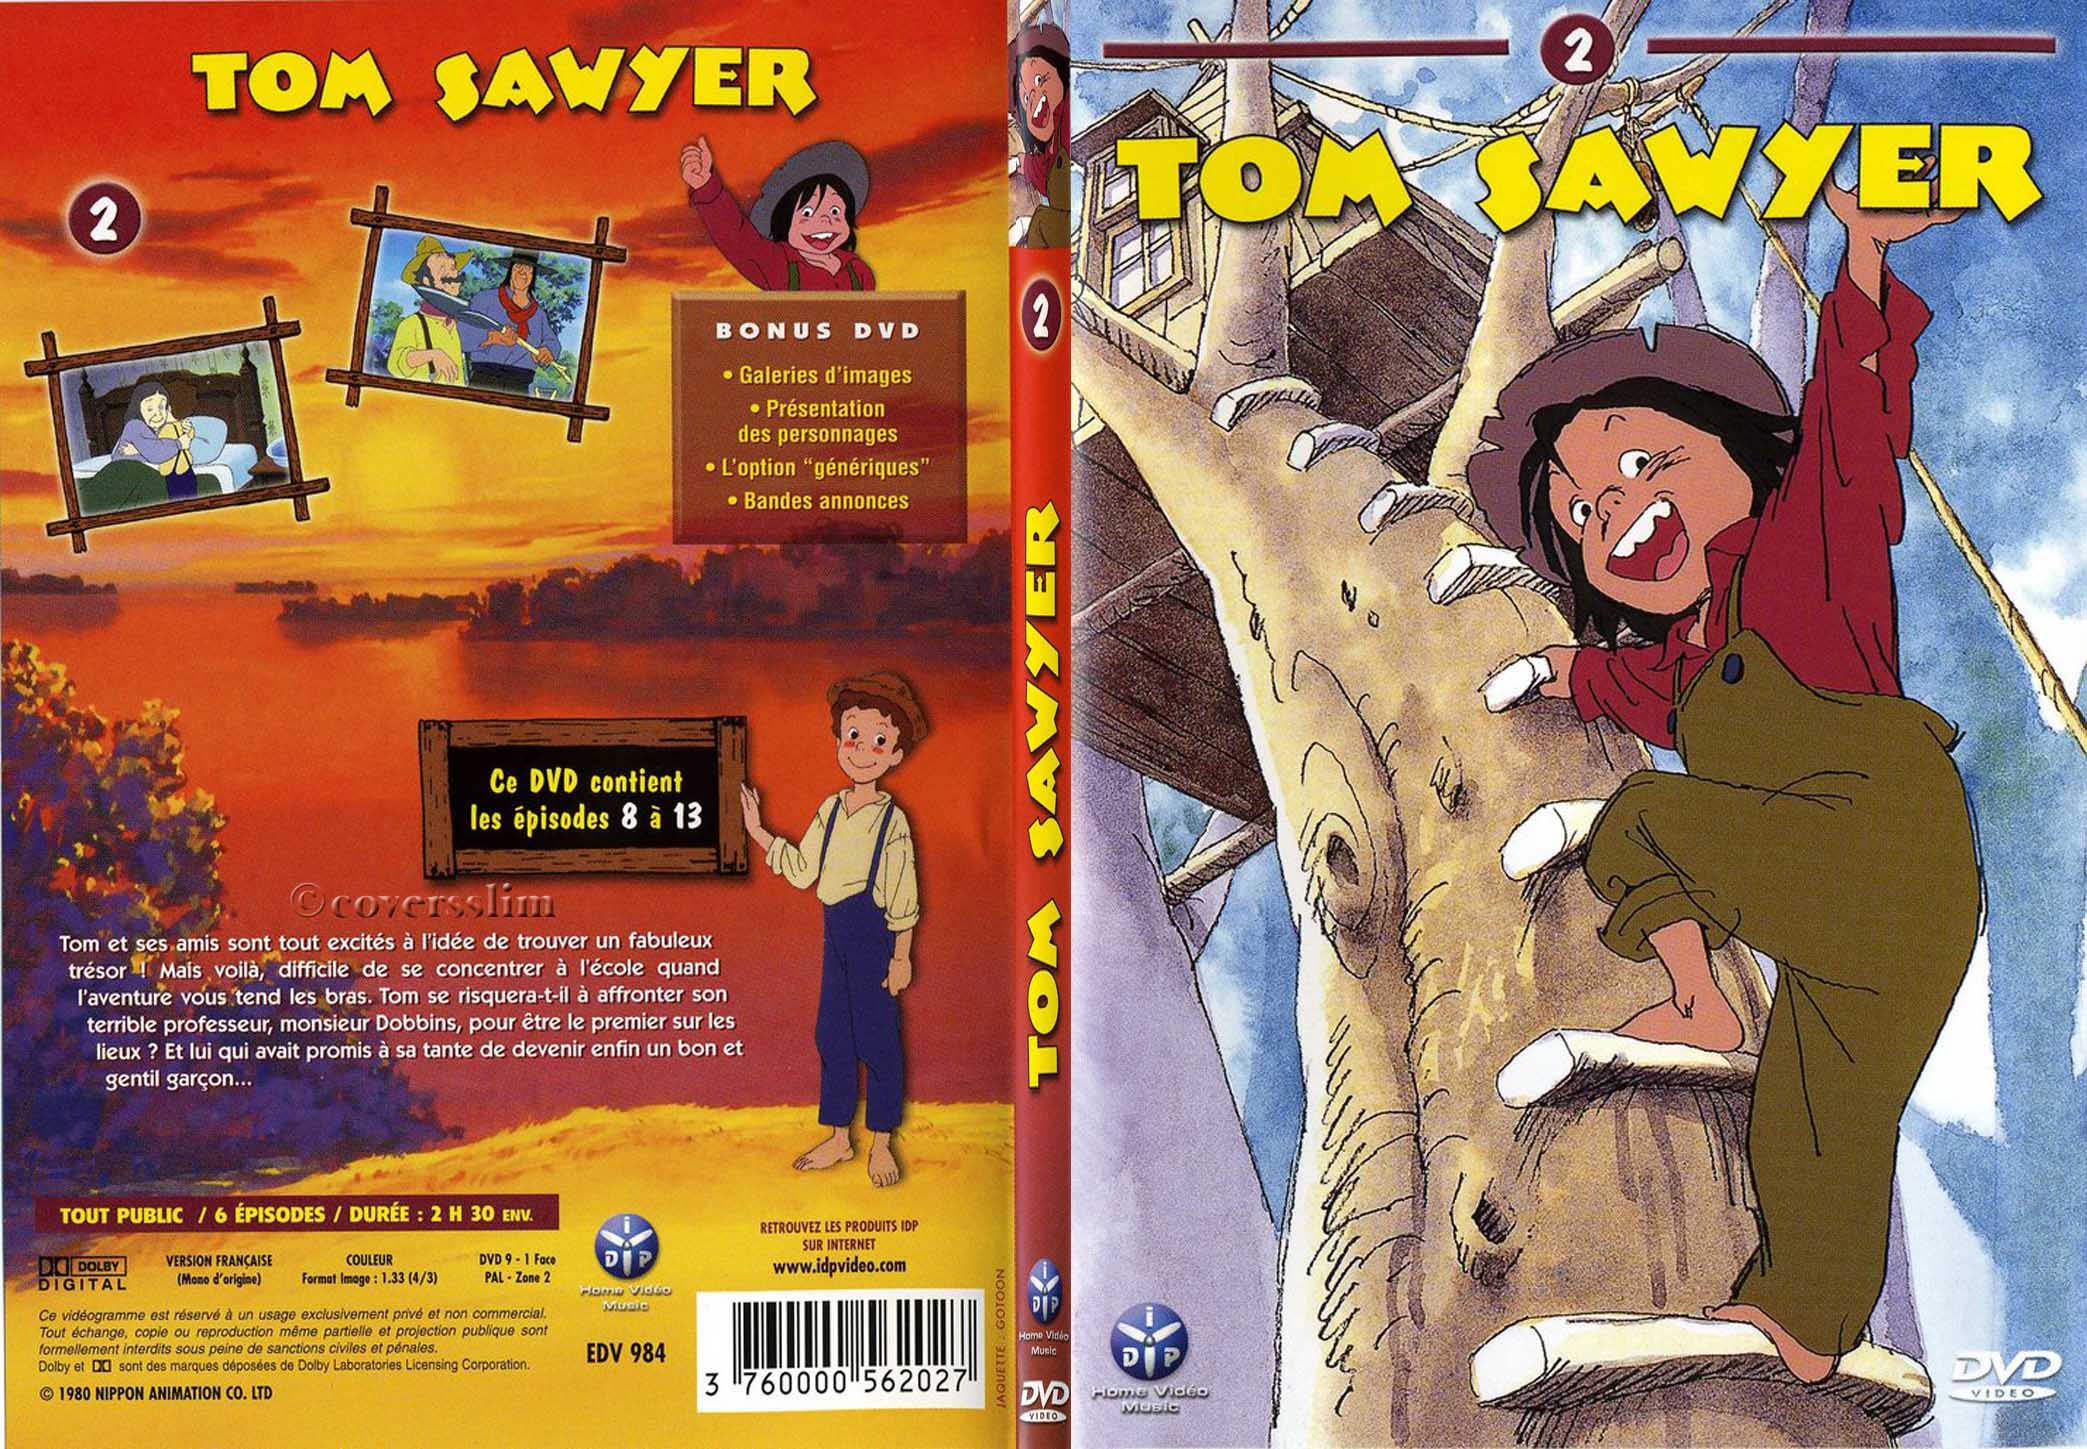 Jaquette DVD Tom Sawyer vol 2 - SLIM